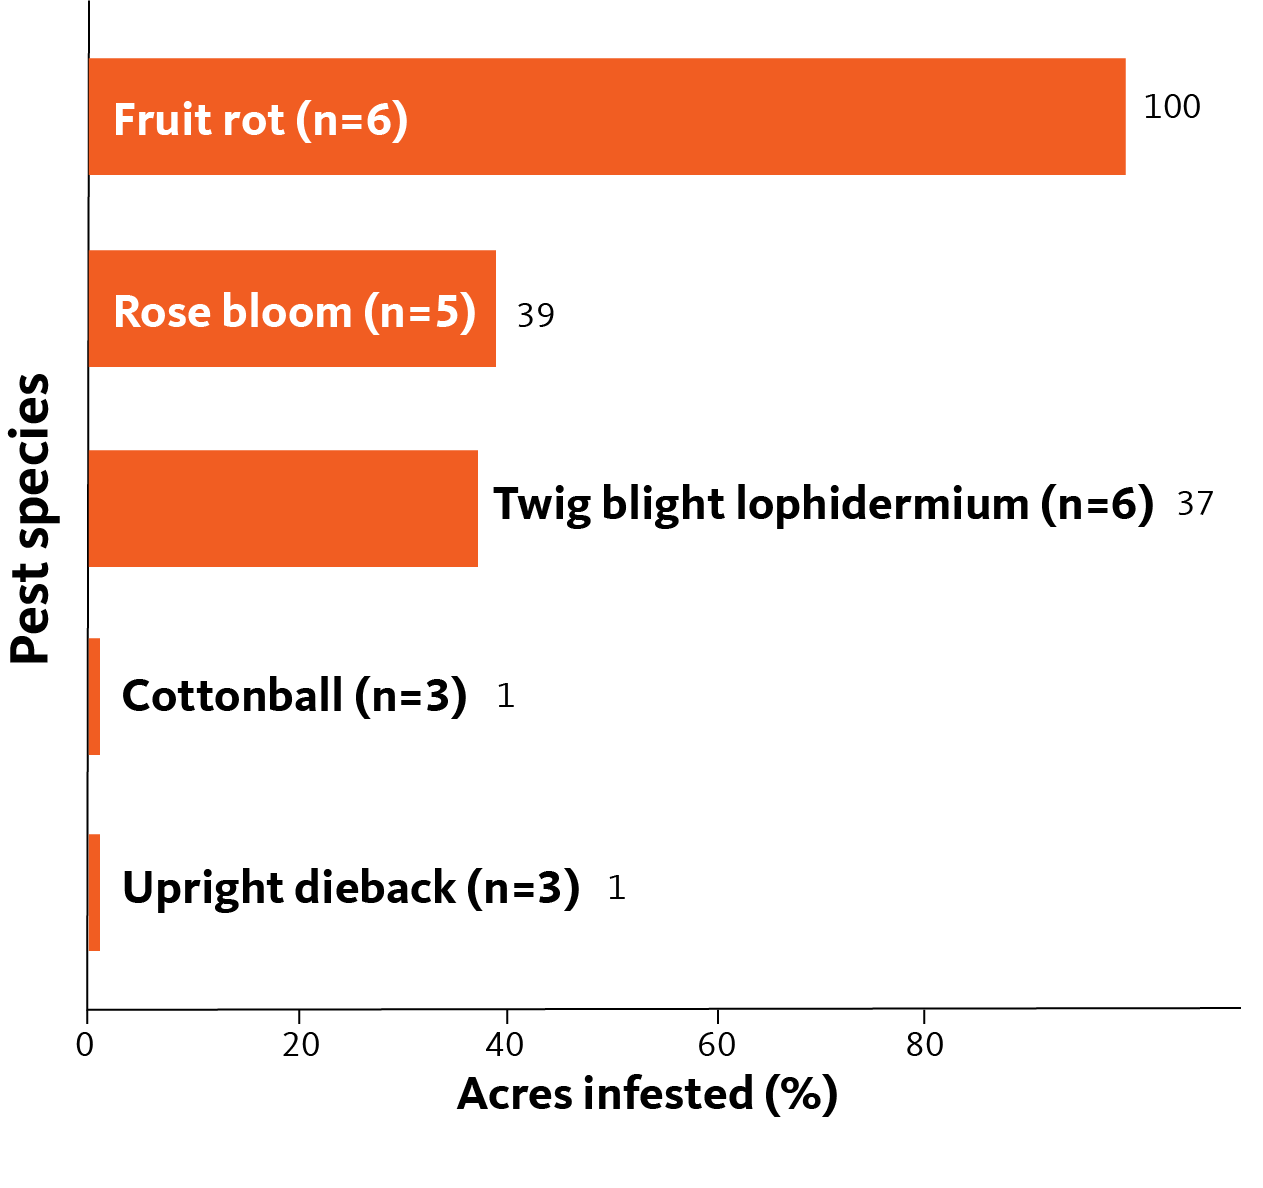 Bar chart showing fruit rot as top disease